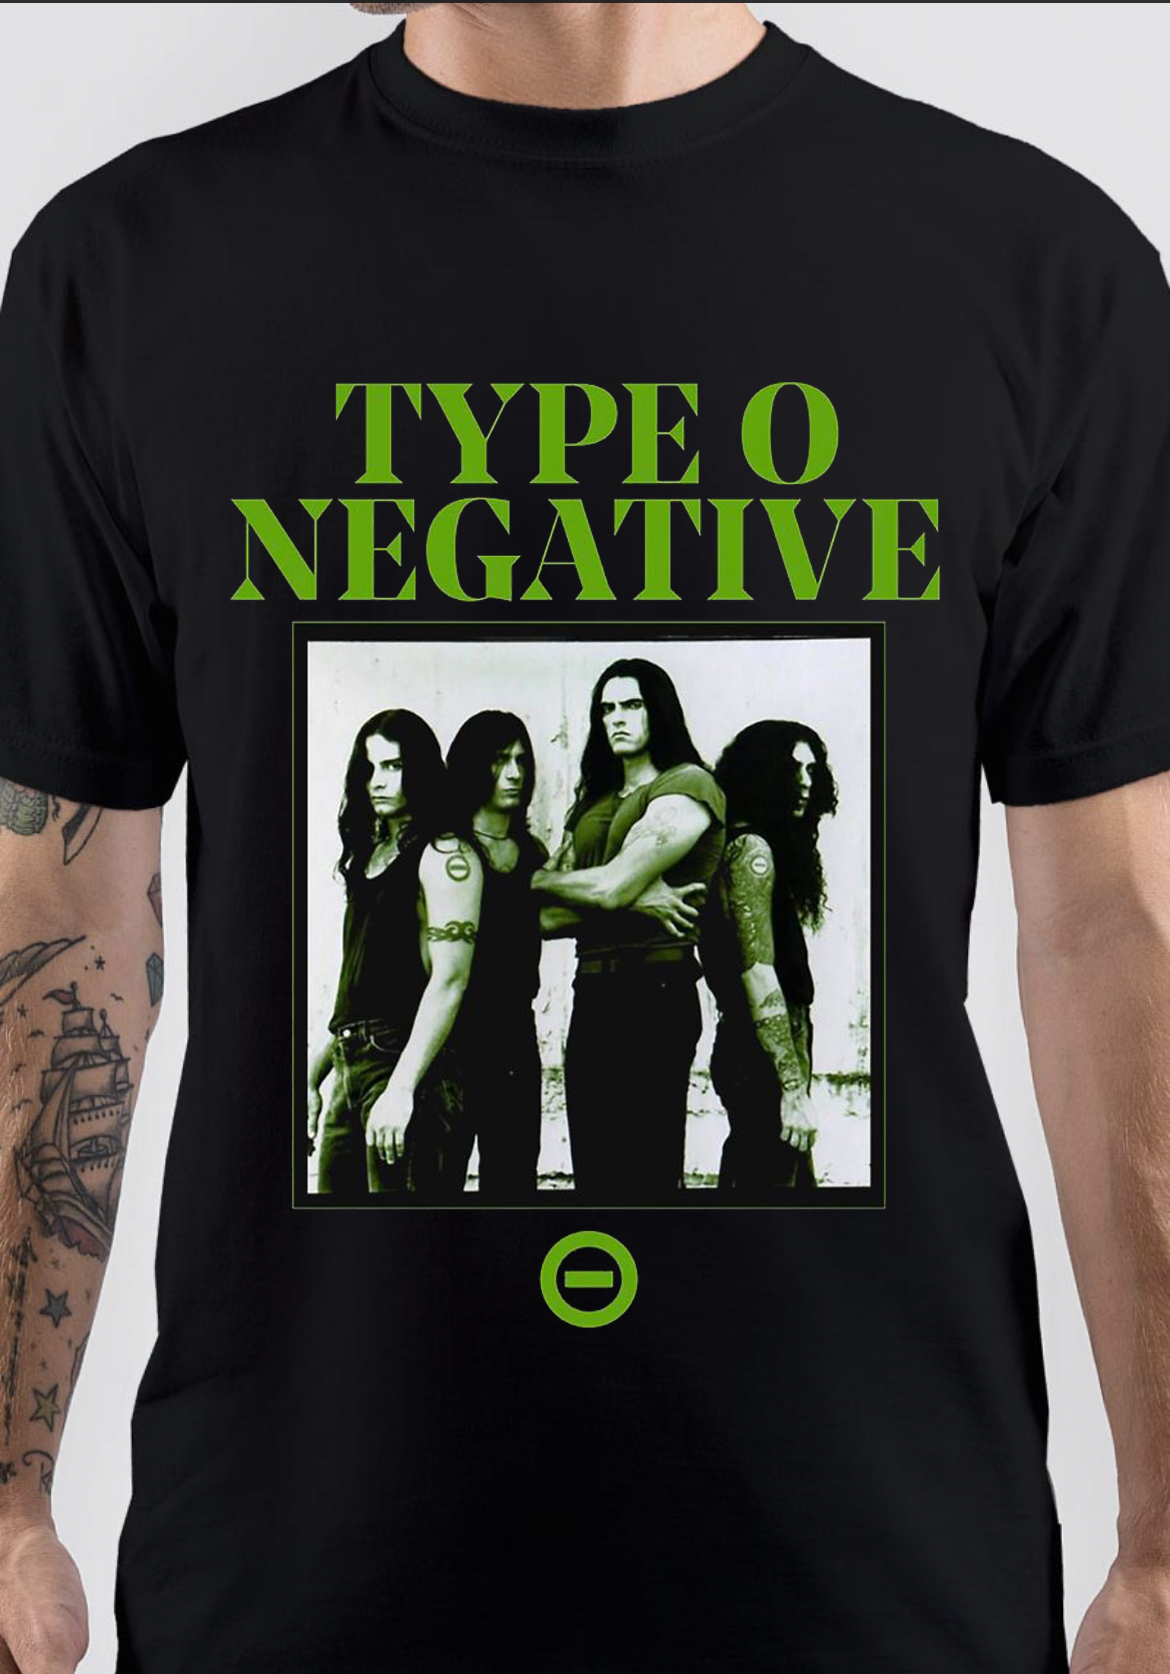 https://www.swagshirts99.com/wp-content/uploads/2022/11/Type-O-Negative-T-Shirt9.jpg